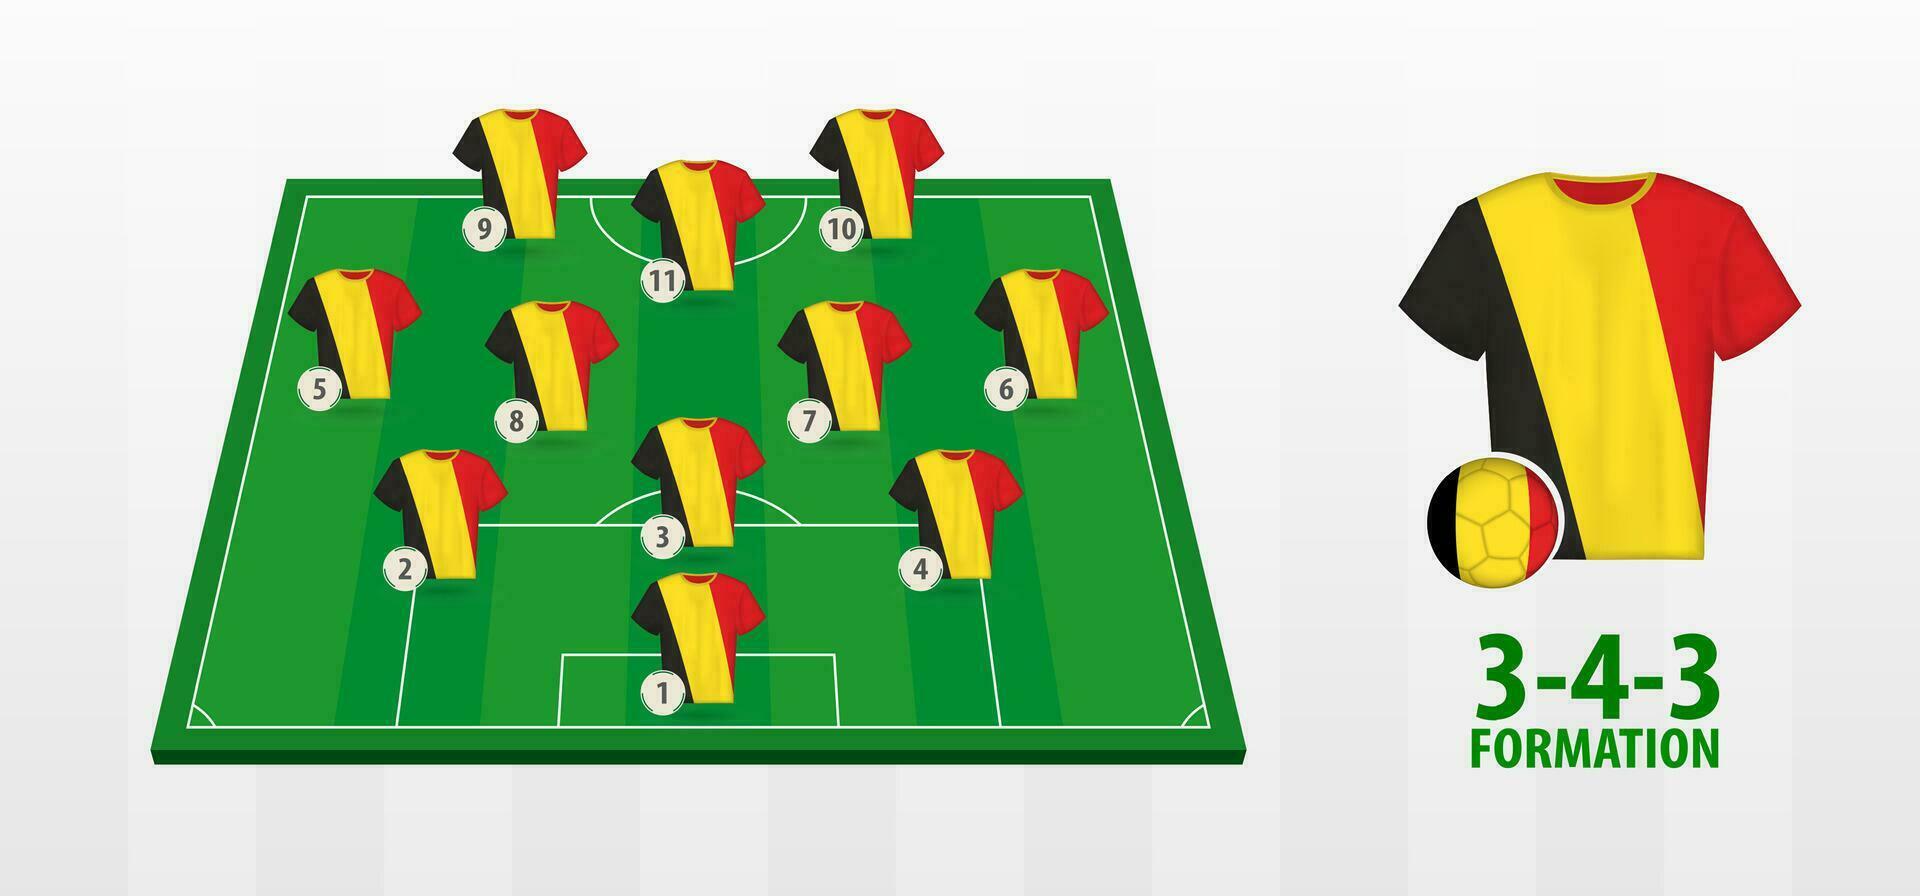 Belgien National Fußball Mannschaft Formation auf Fußball Feld. vektor